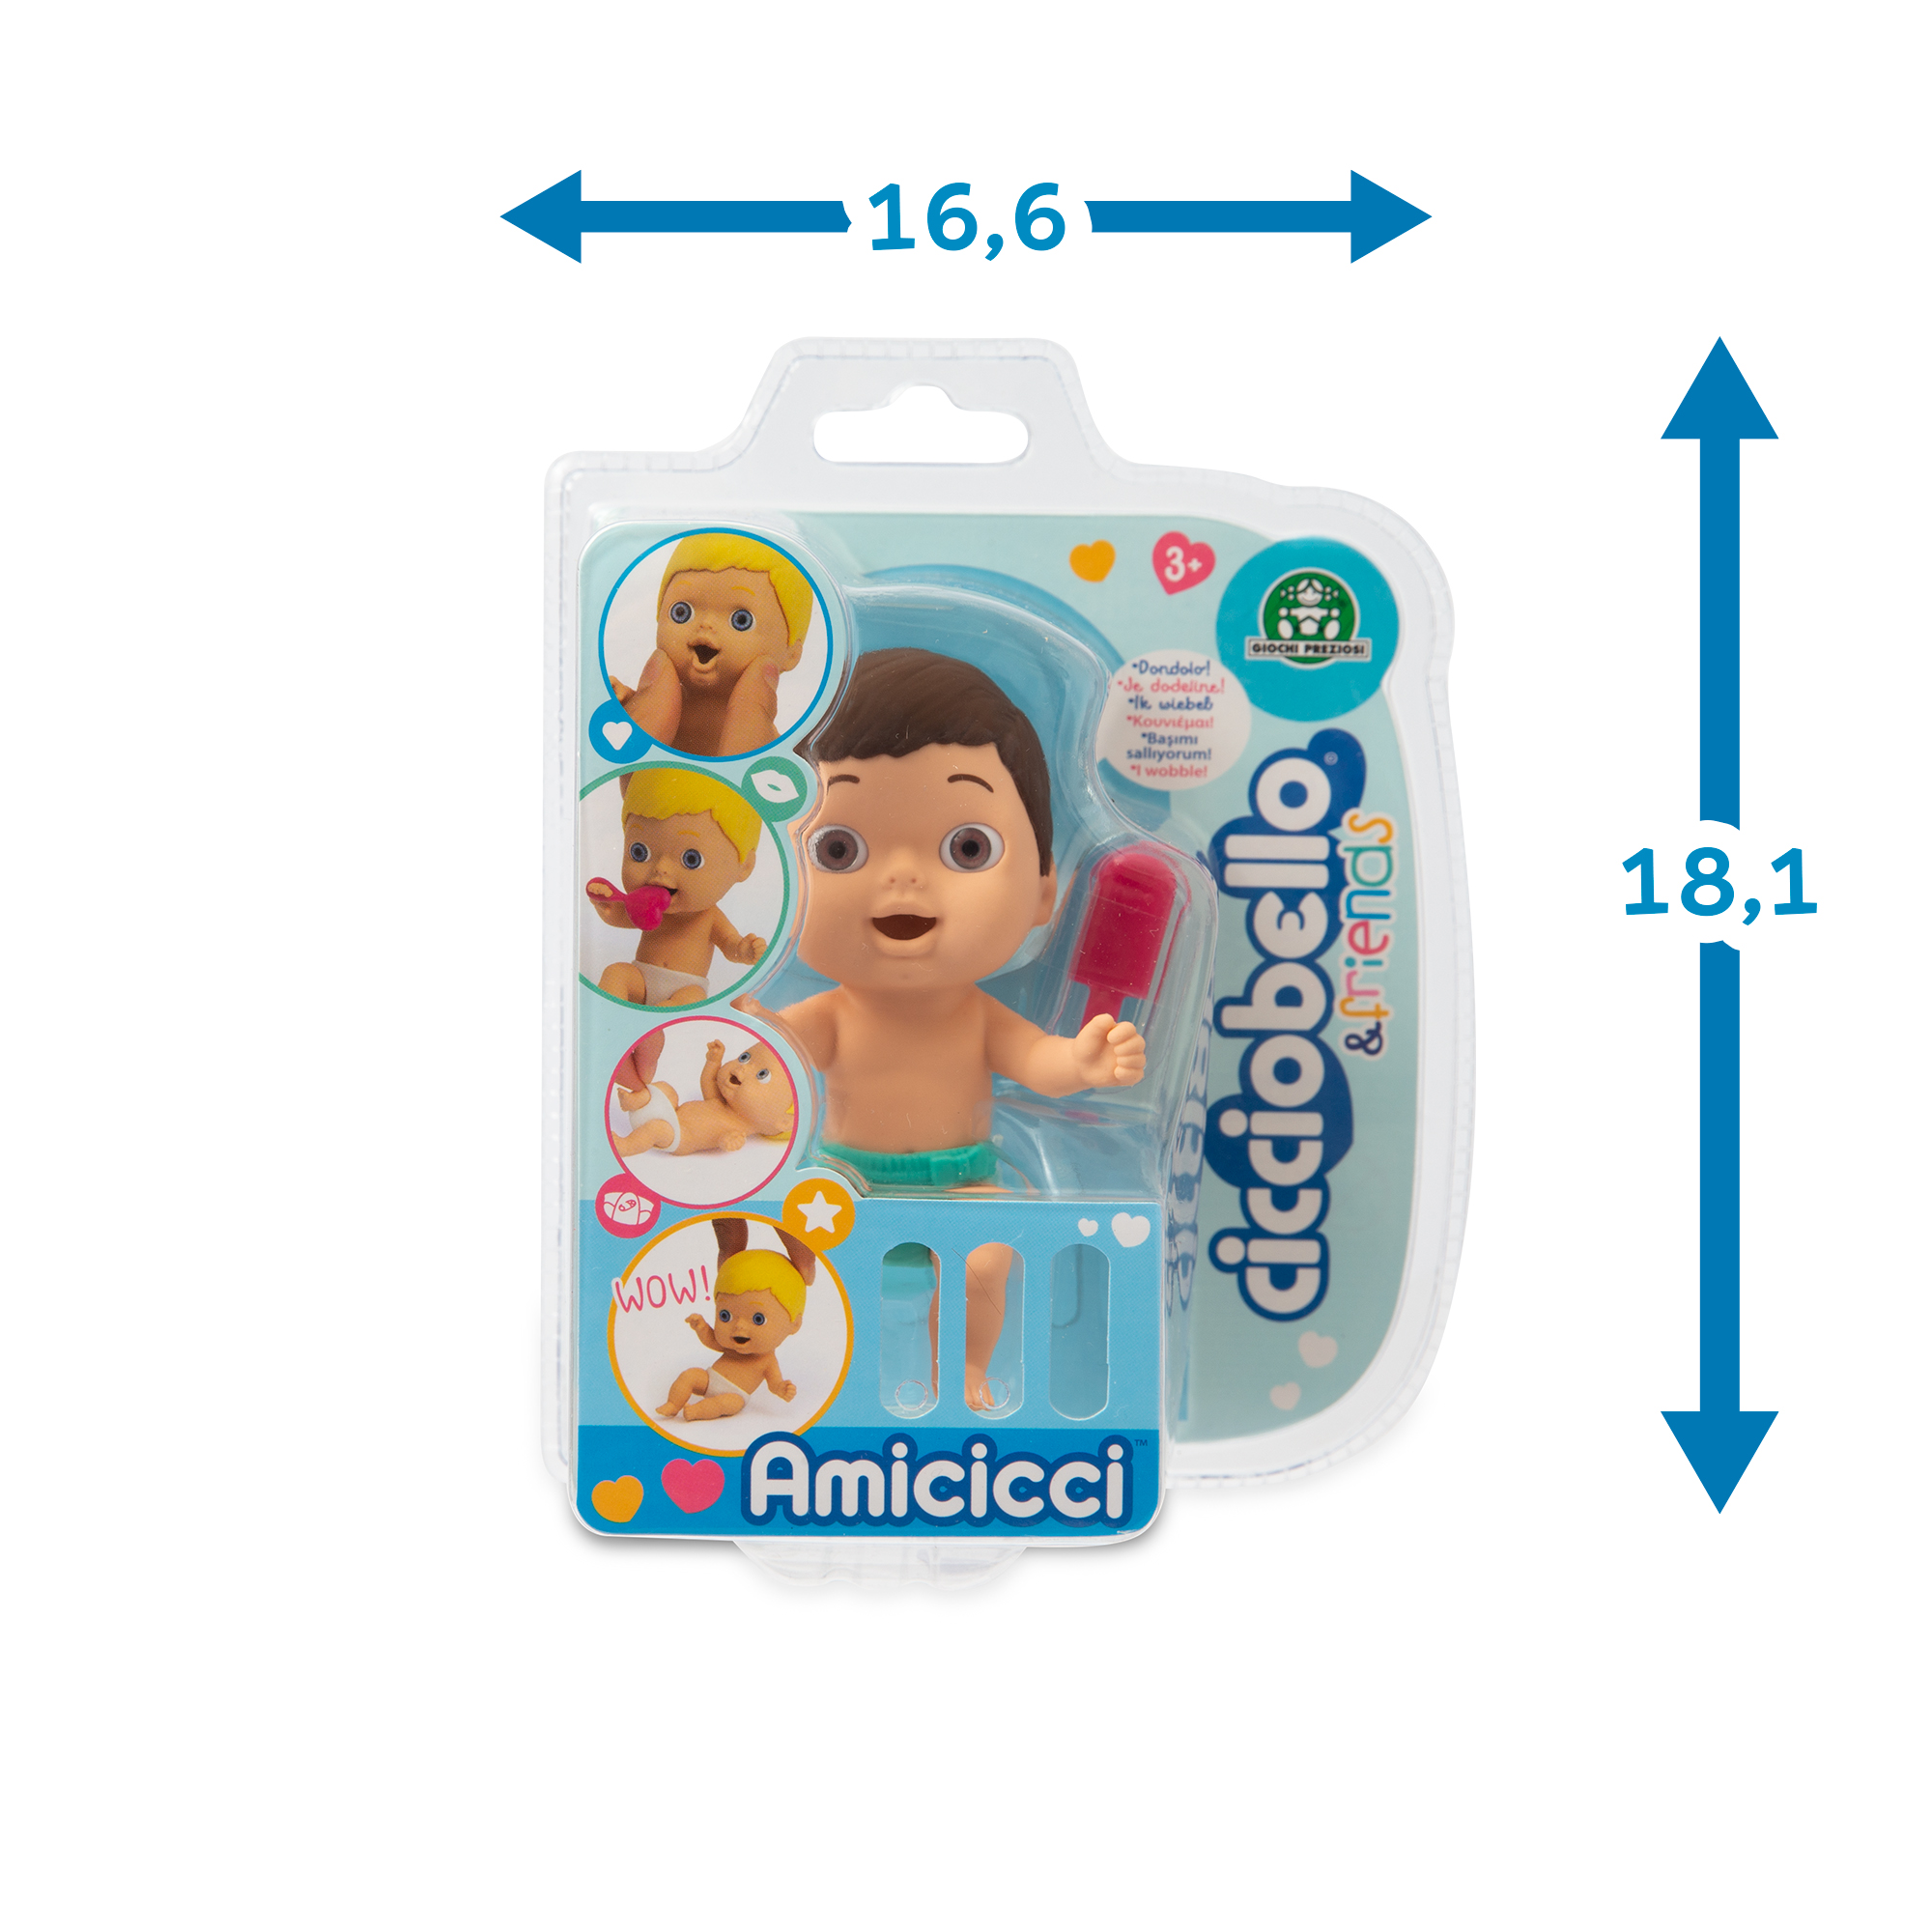 AMICICCI MINI DOLLS 11 CM CC002A00 - V20922